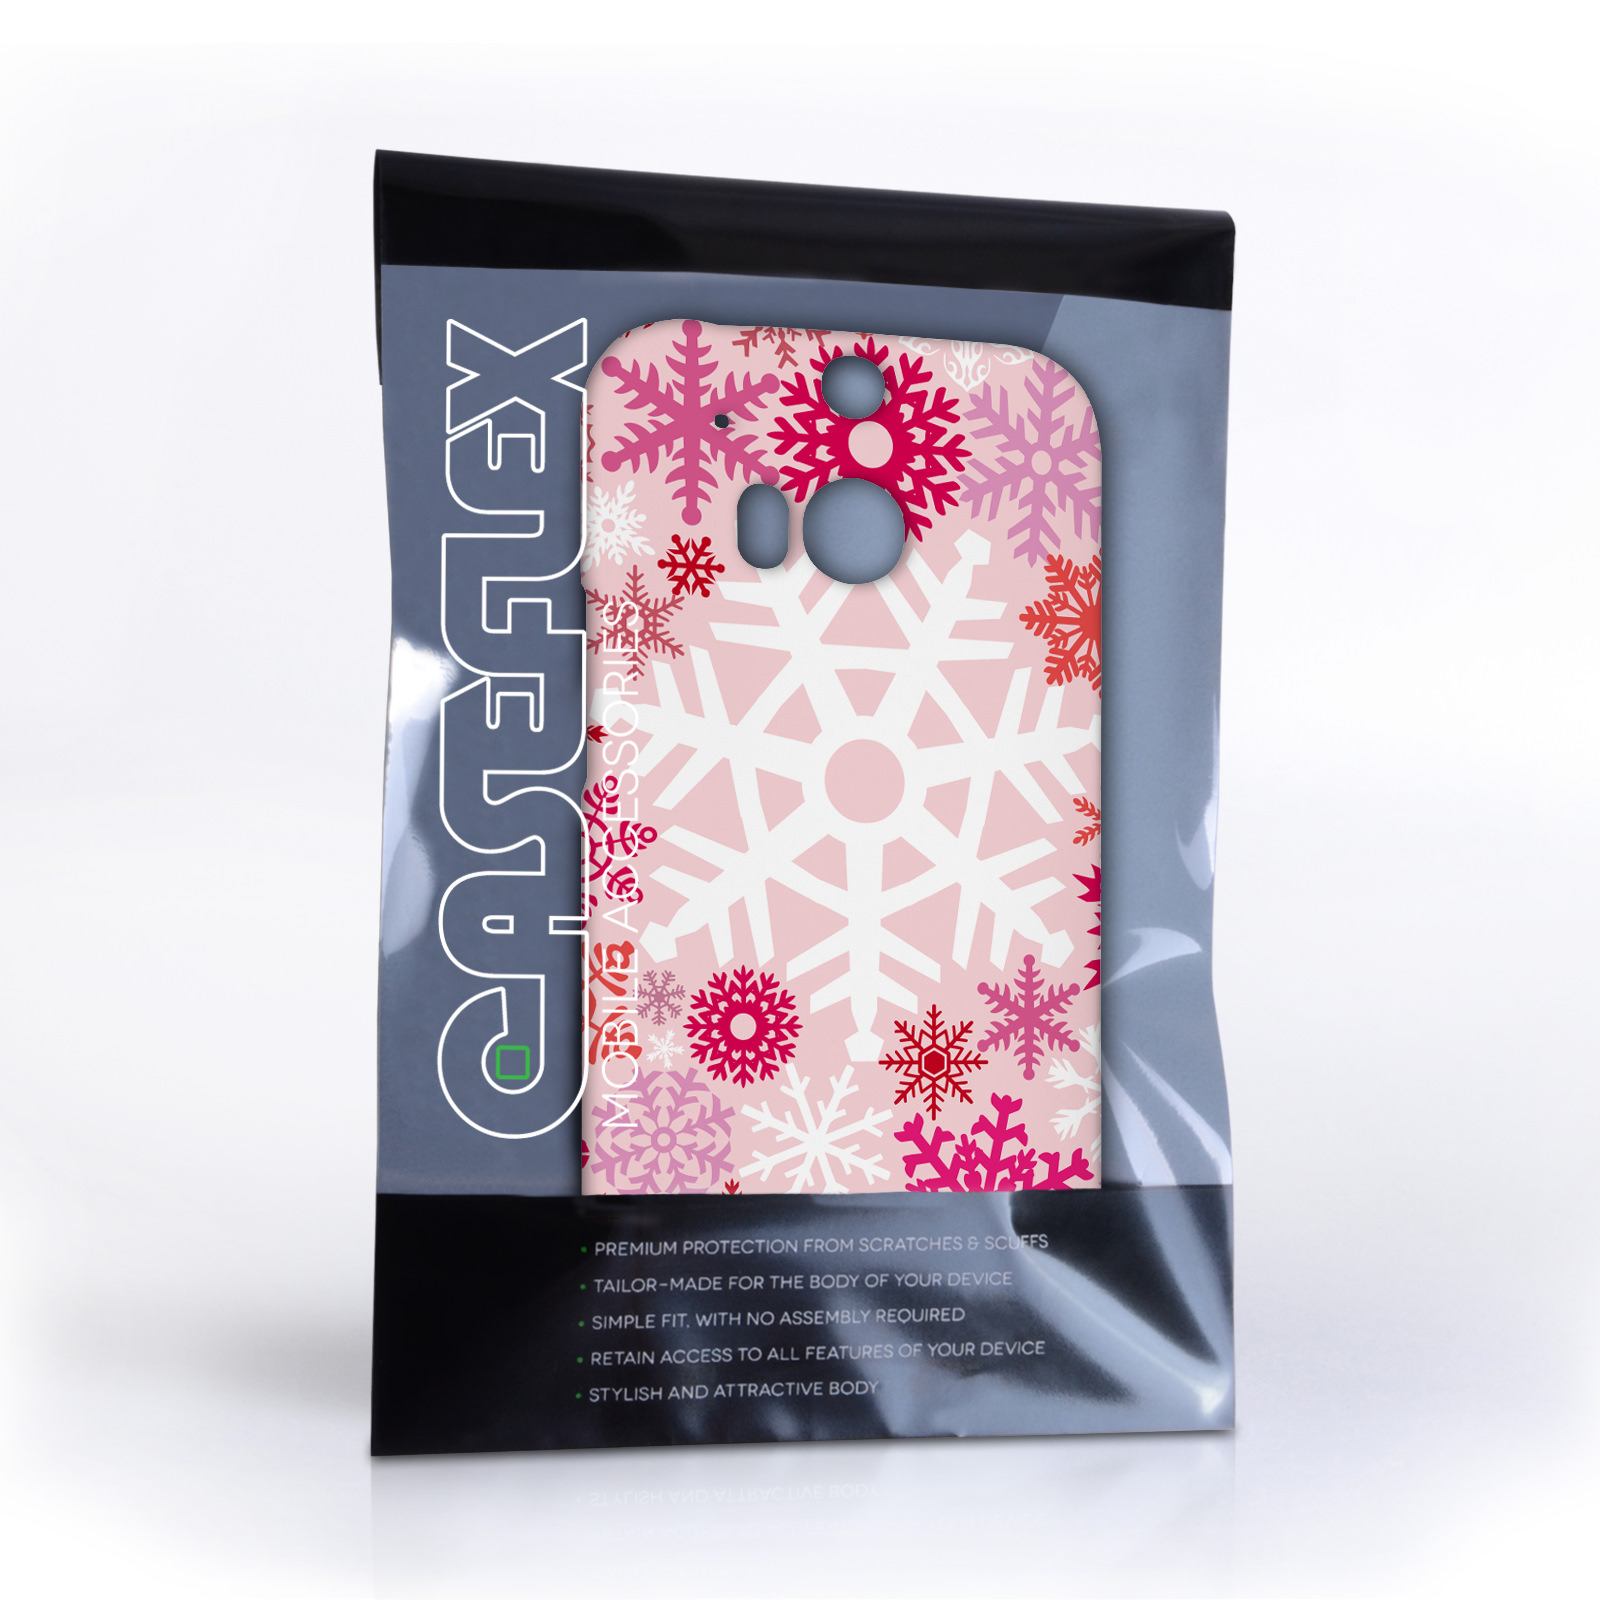 Caseflex HTC One M8 Winter Christmas Snowflake Hard Case - Red / Pink